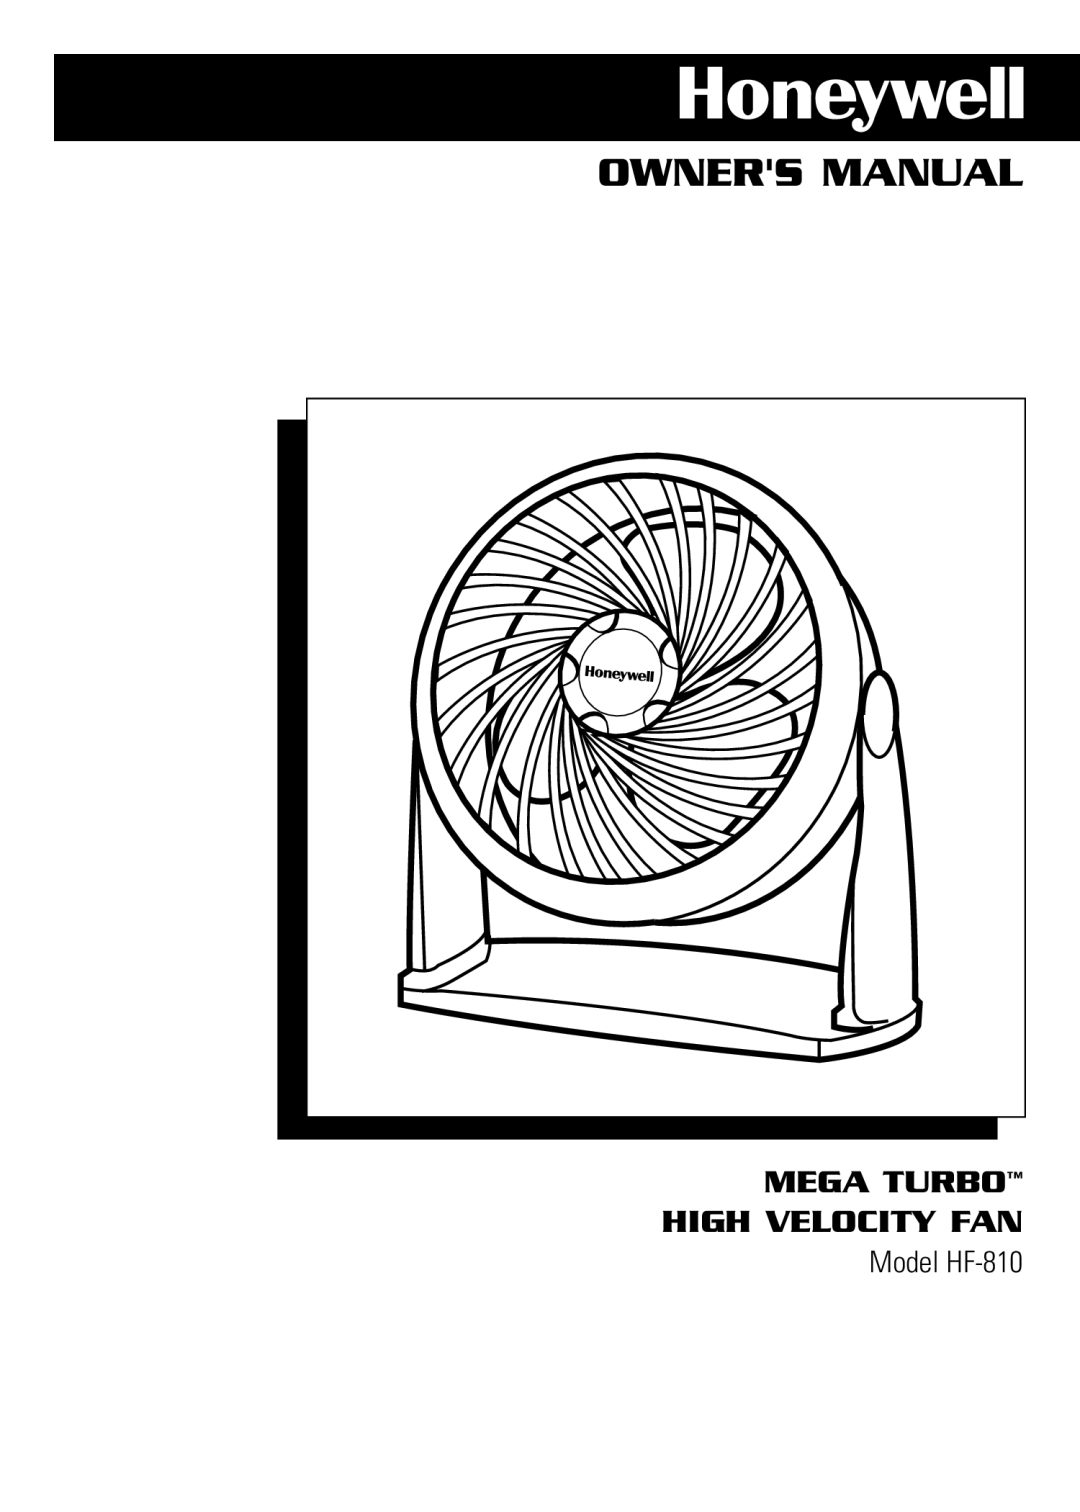 Honeywell owner manual Mega Turbo High Velocity Fan, Model HF-810, Owners Manual 